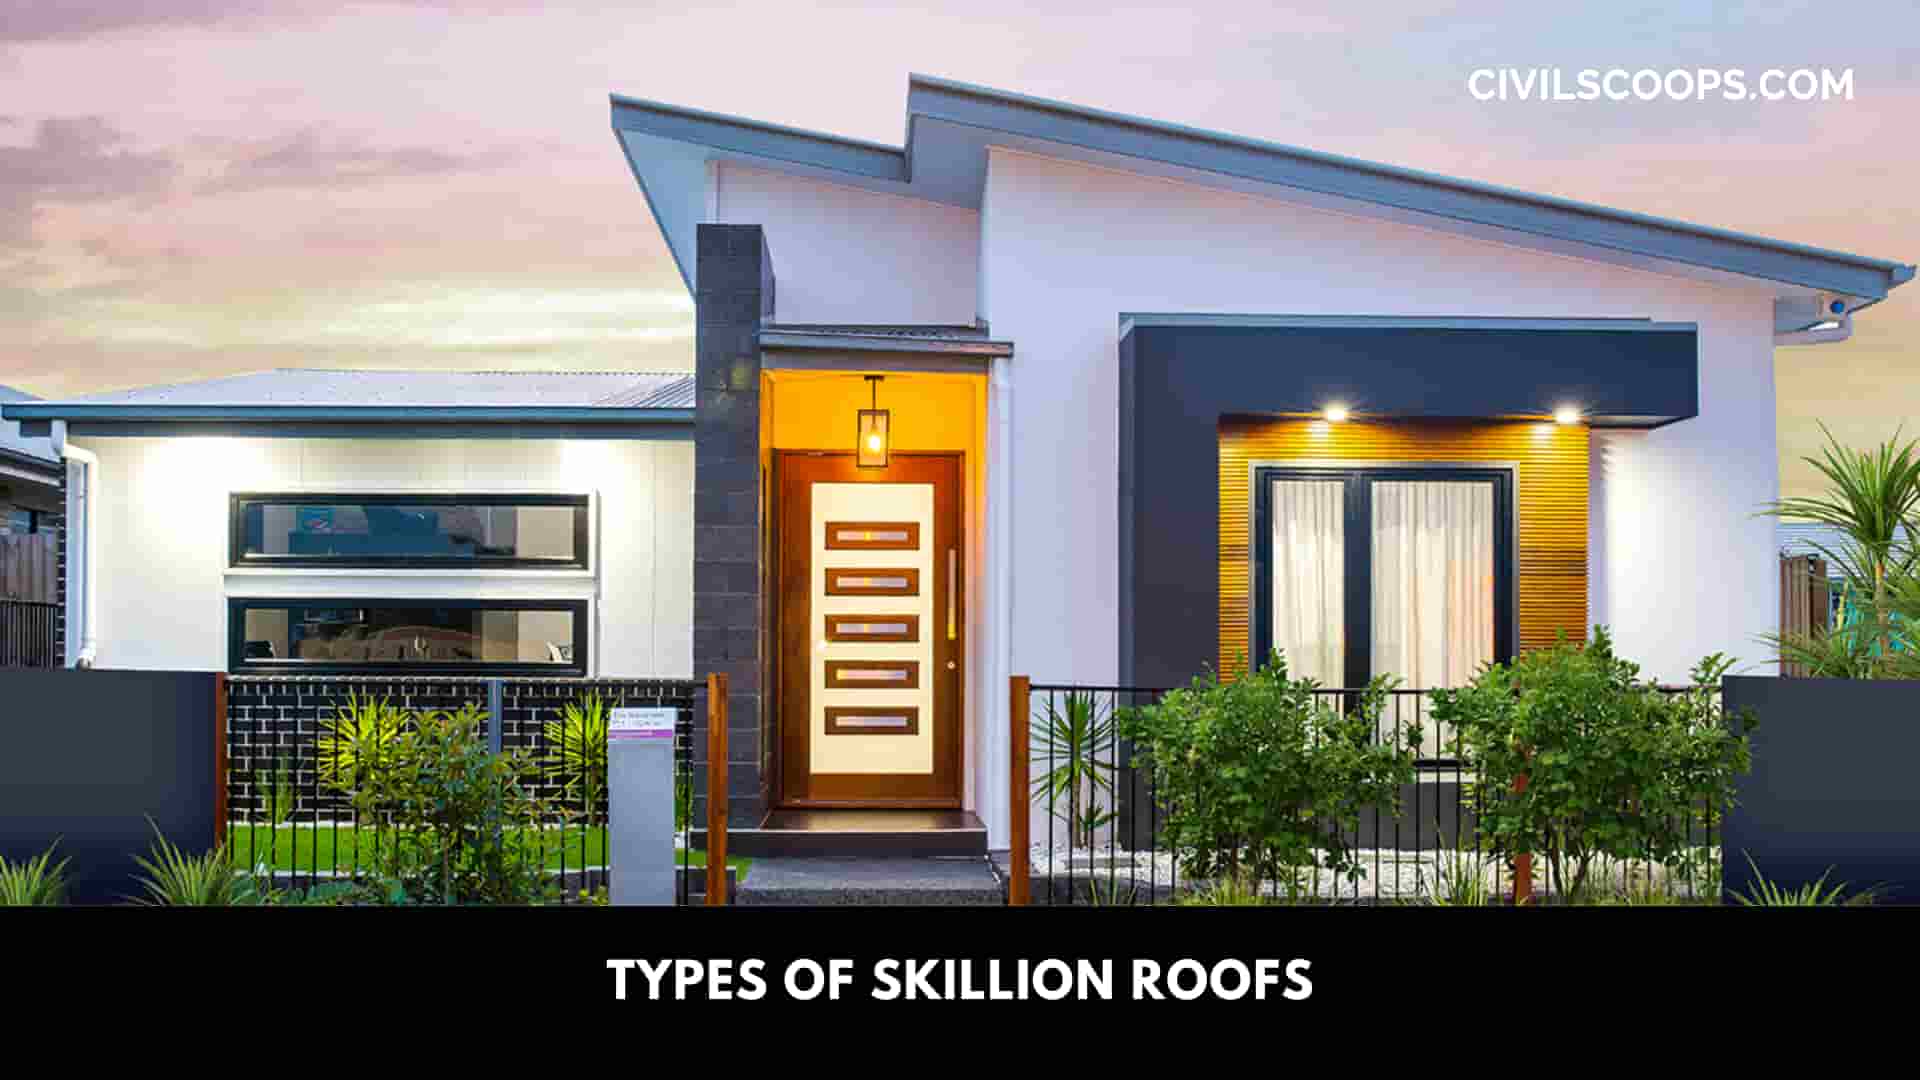 Types of Skillion Roofs